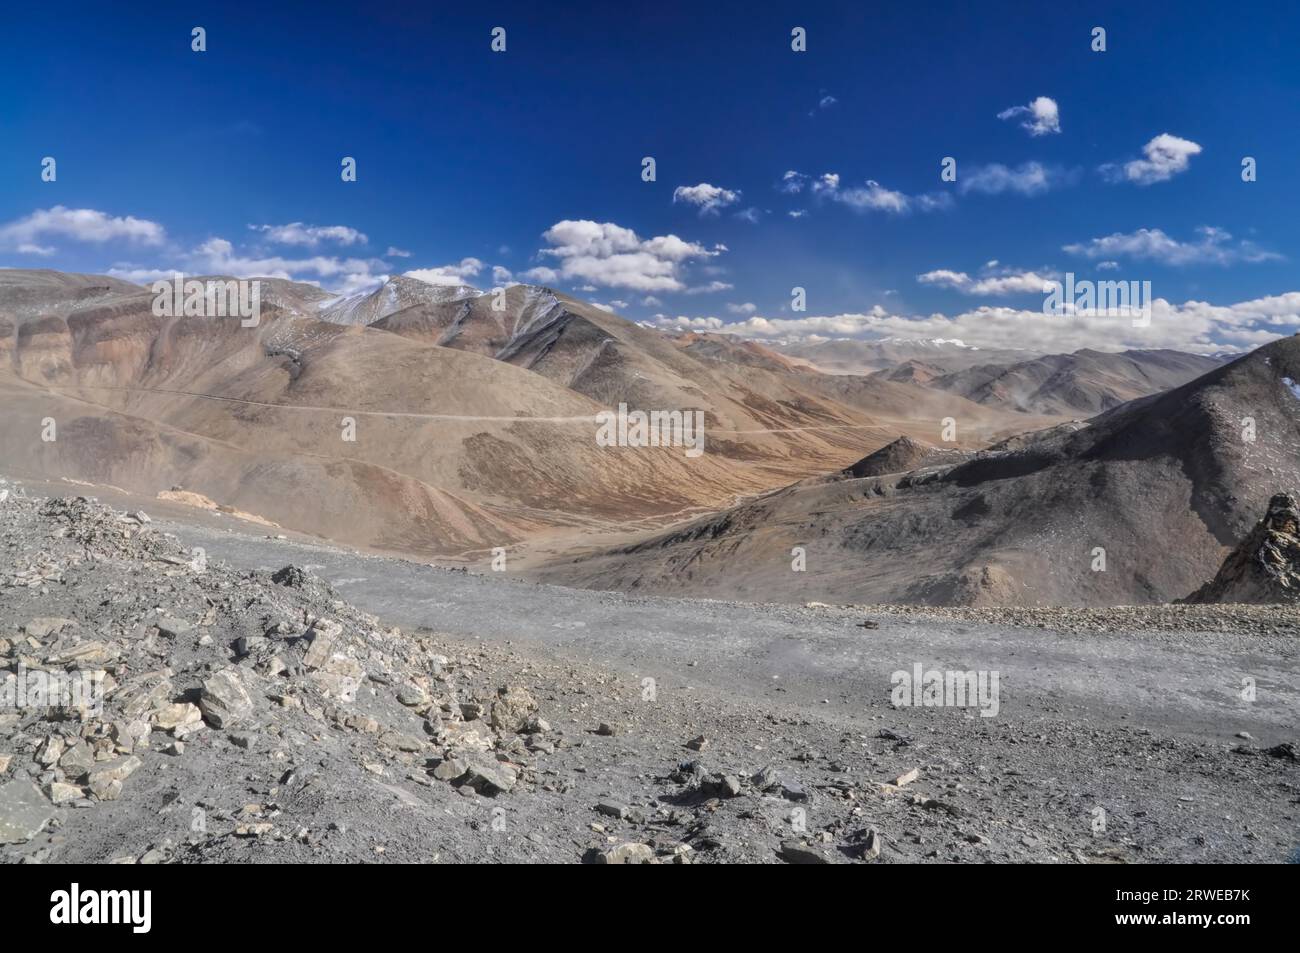 Rocky road leading through the mountains on the way to Ladakh, India Stock Photo